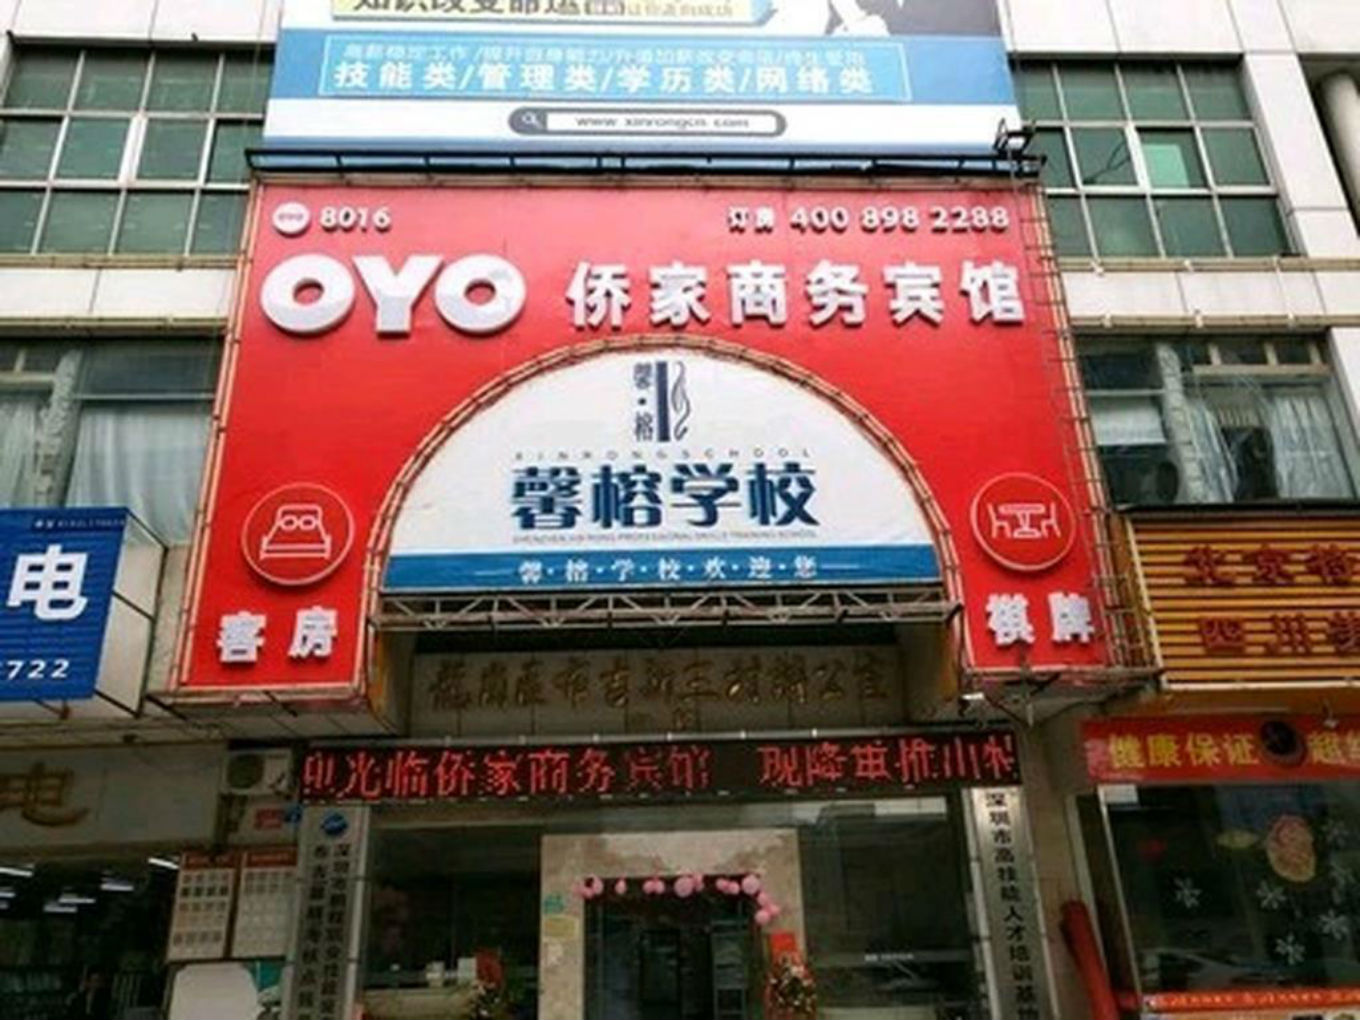 OYO In China May Get Big Boost From Didi Chuxing